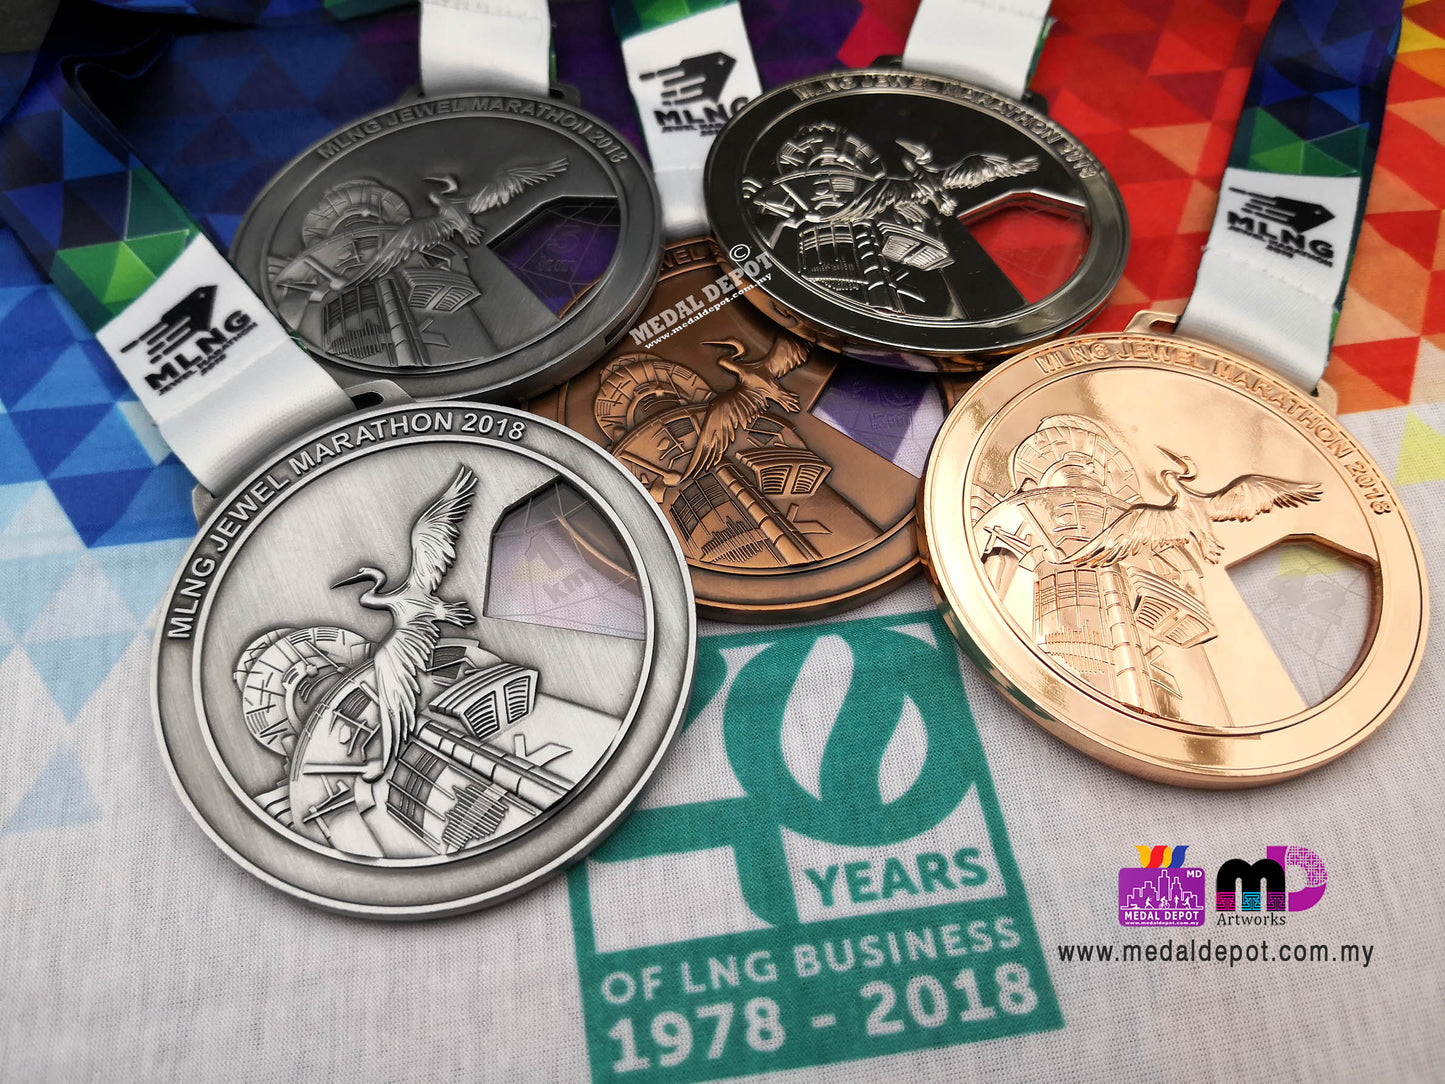 MLNG Jewel Marathon 2018